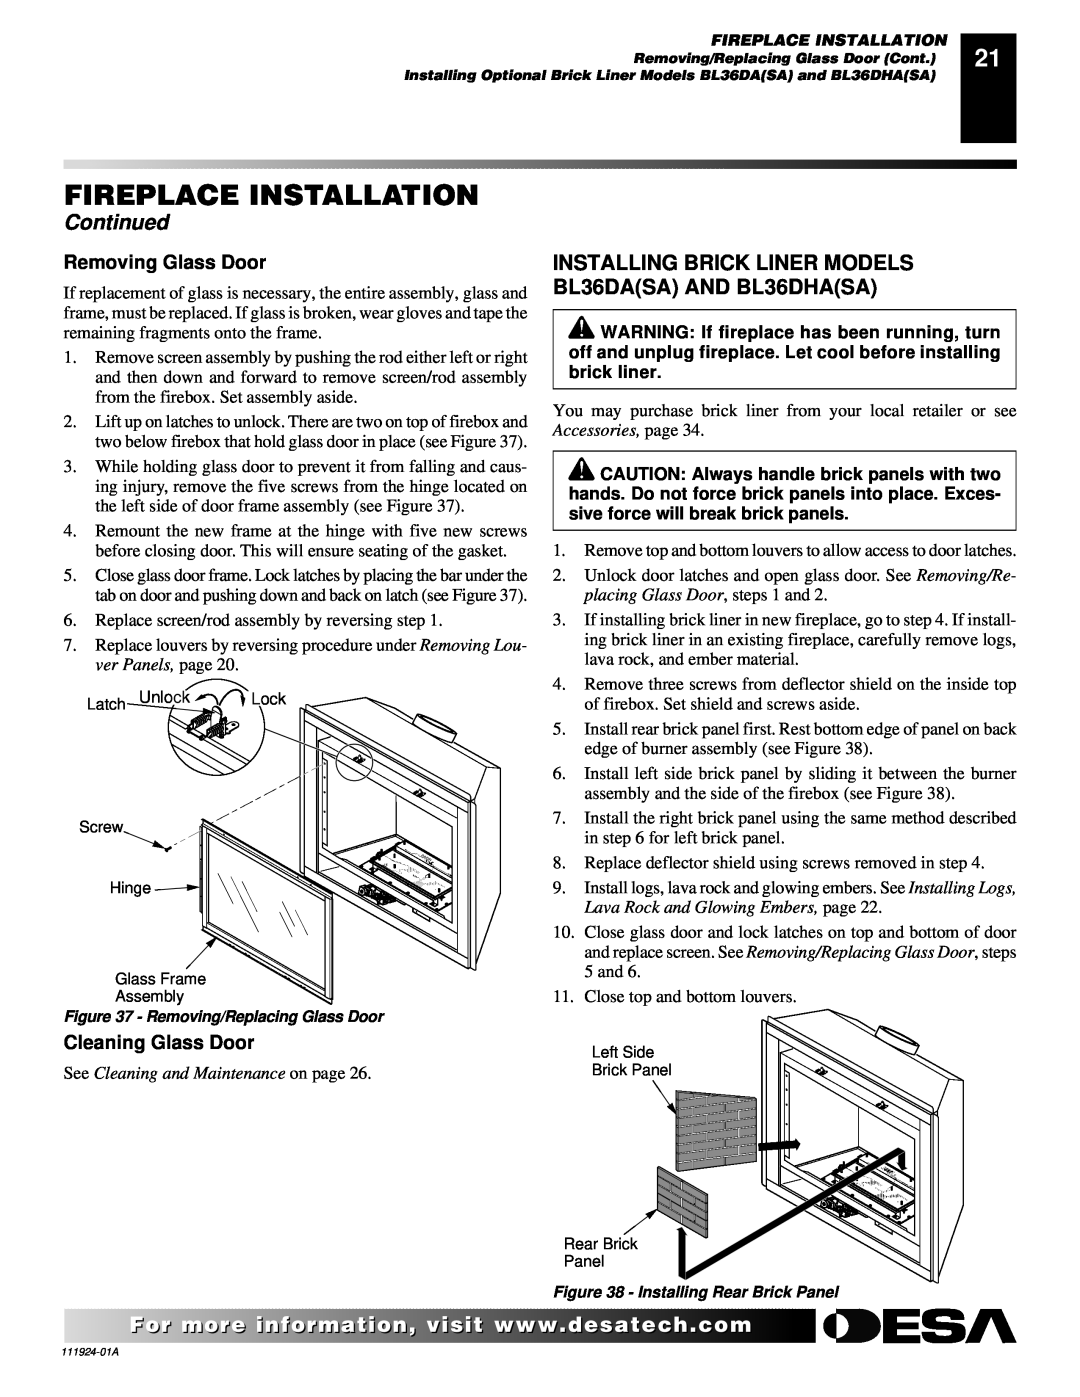 Desa K36EN, K36EP installation manual Fireplace Installation, Continued, Removing Glass Door, Cleaning Glass Door 